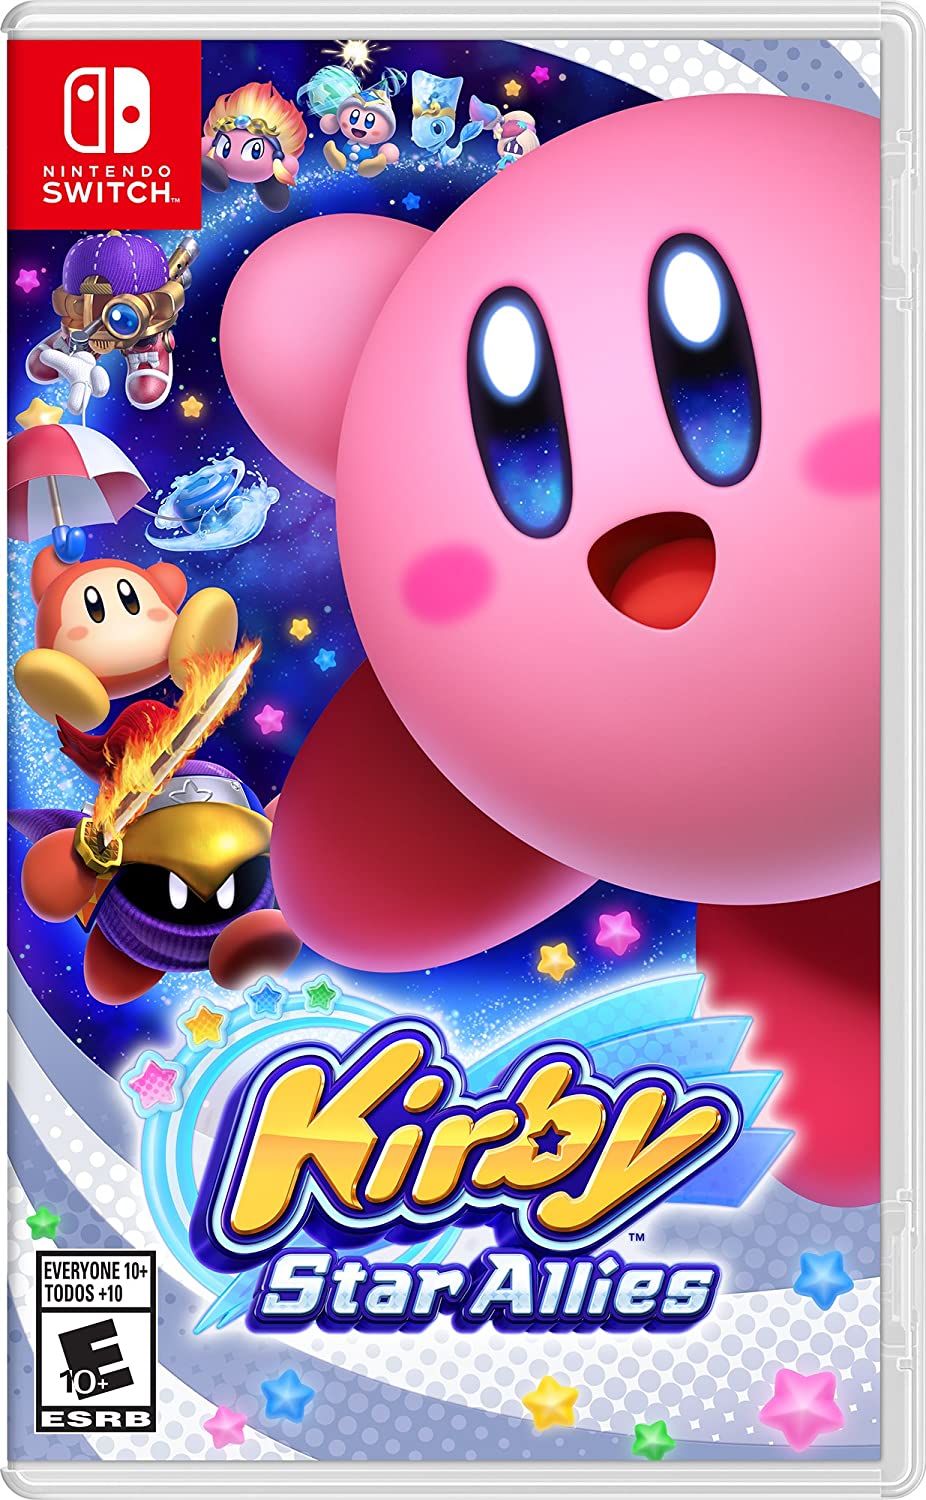 Kirby Star Allies (Nintendo Switch) $40 + Free Shipping